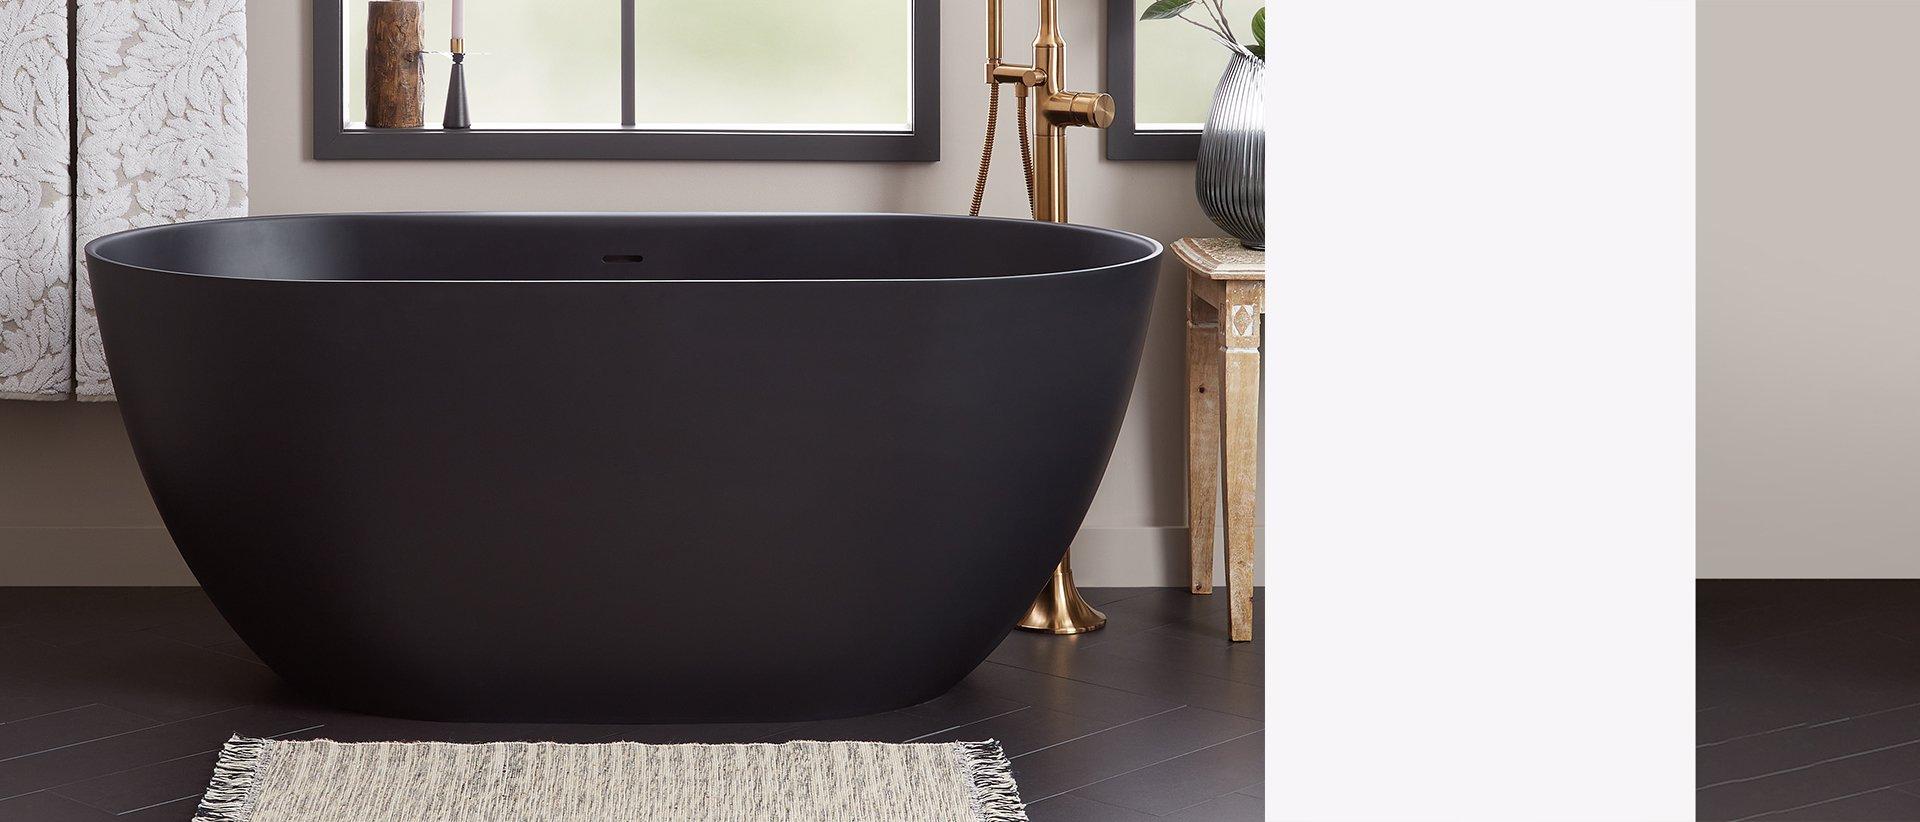 sophisticated matte black freestanding tub